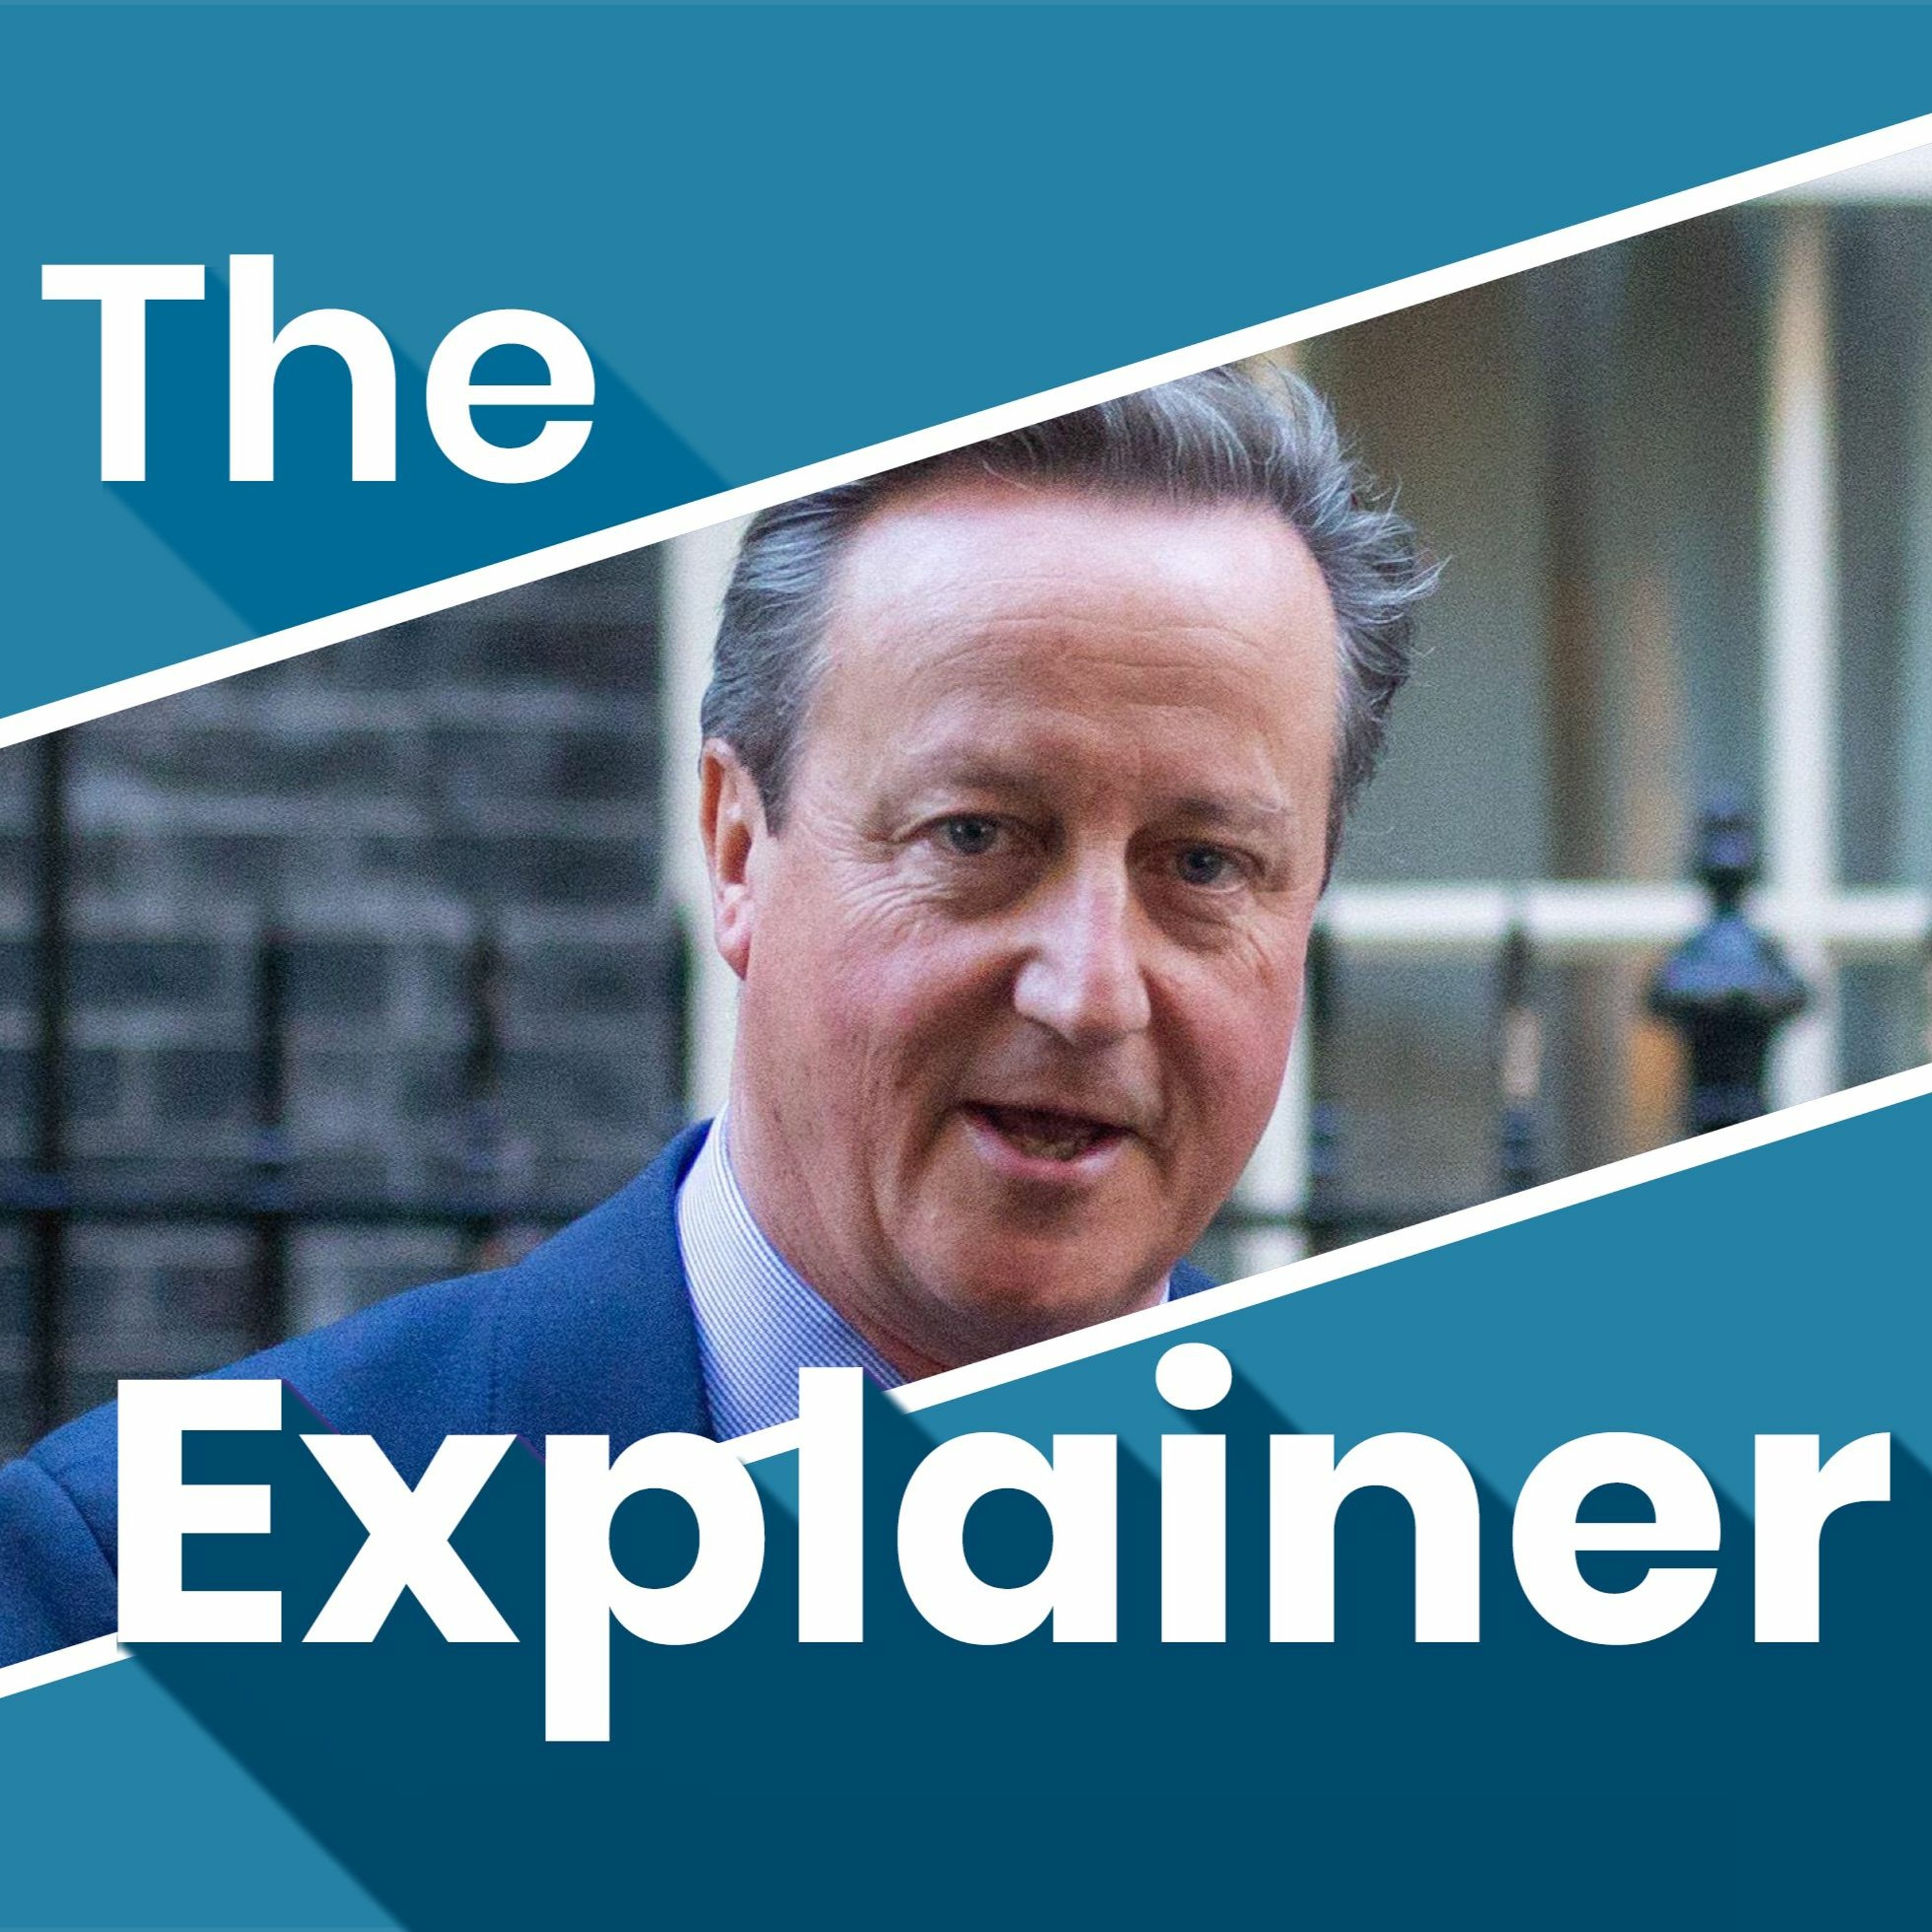 How has David Cameron made a surprise return to British politics?